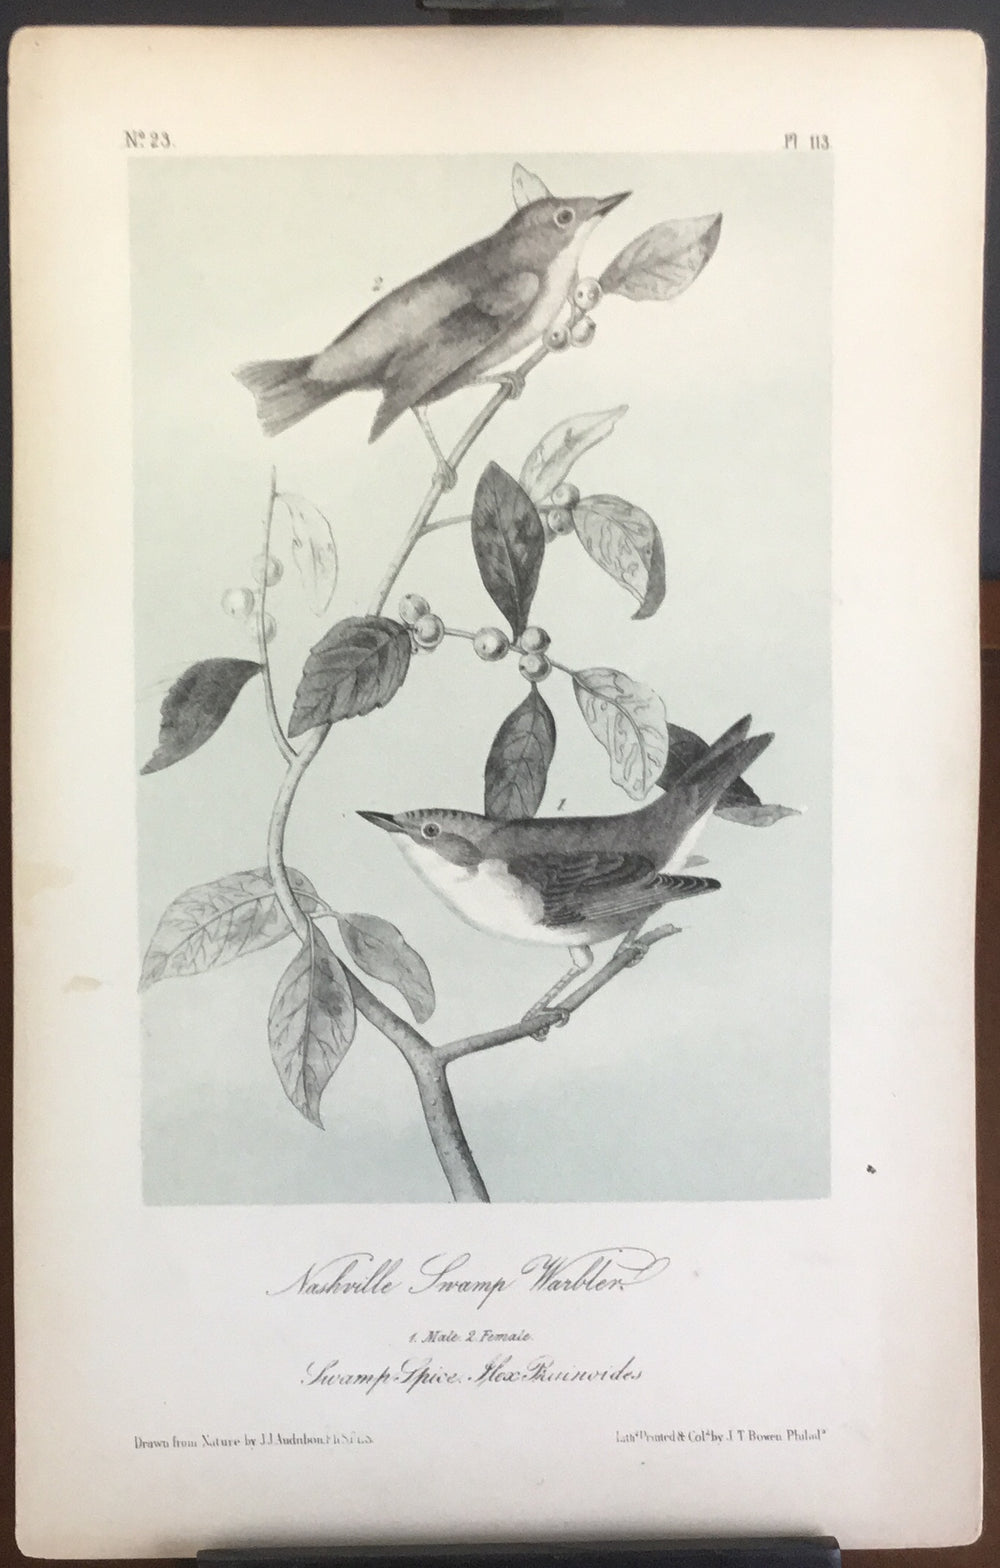 Audubon Octavo Nashville Swamp Warbler, plate 113, uncolored test sheet, 7 x 11